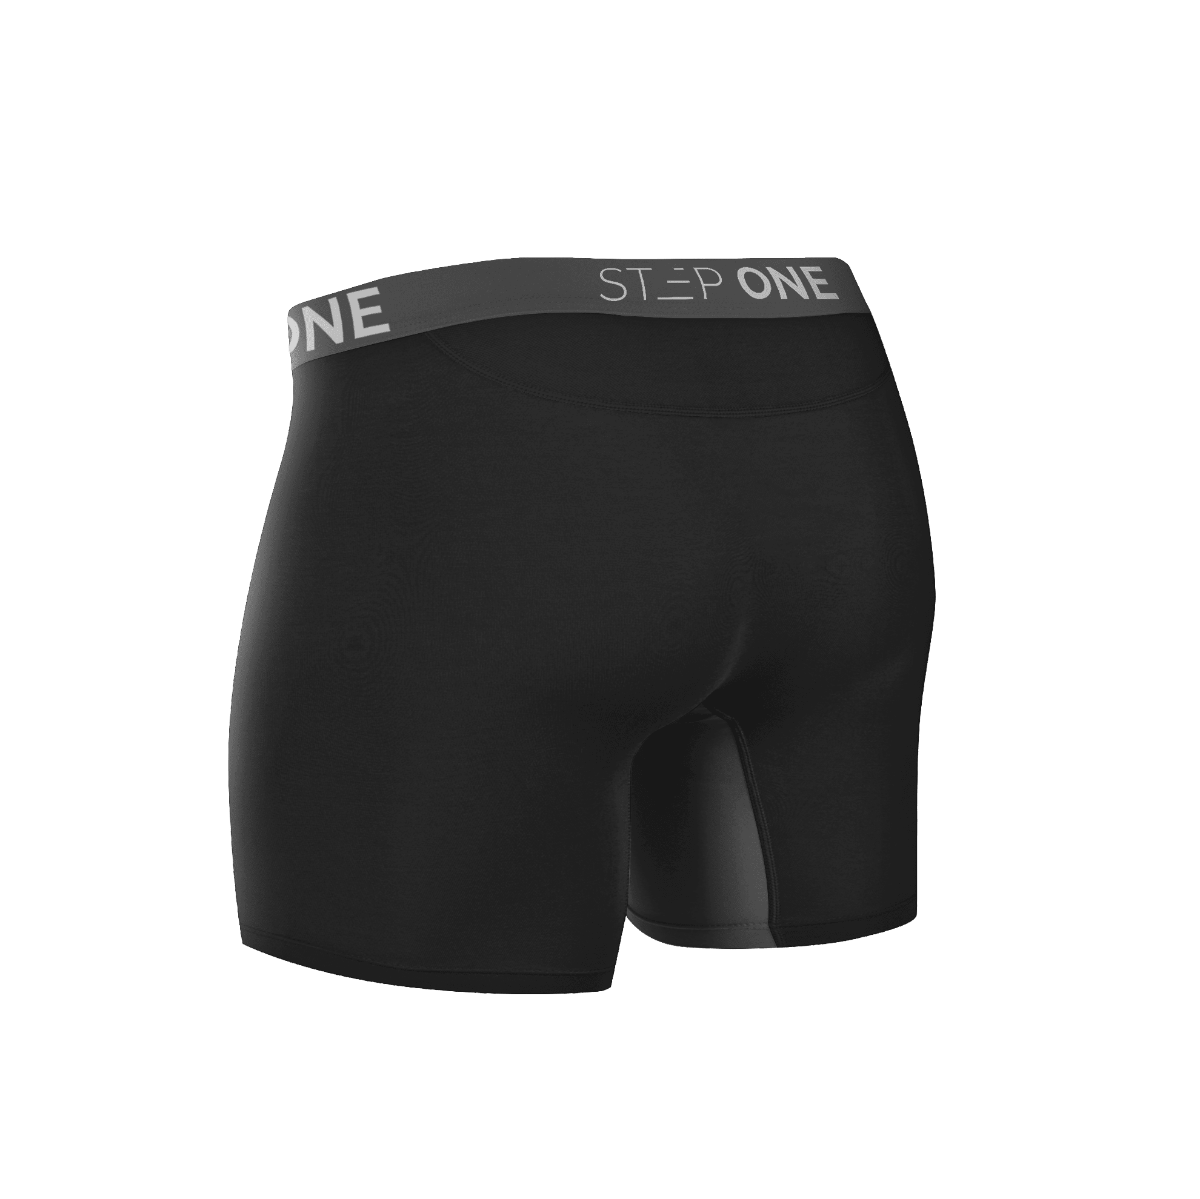 Buy PRO PLUS Black Compression Shorts